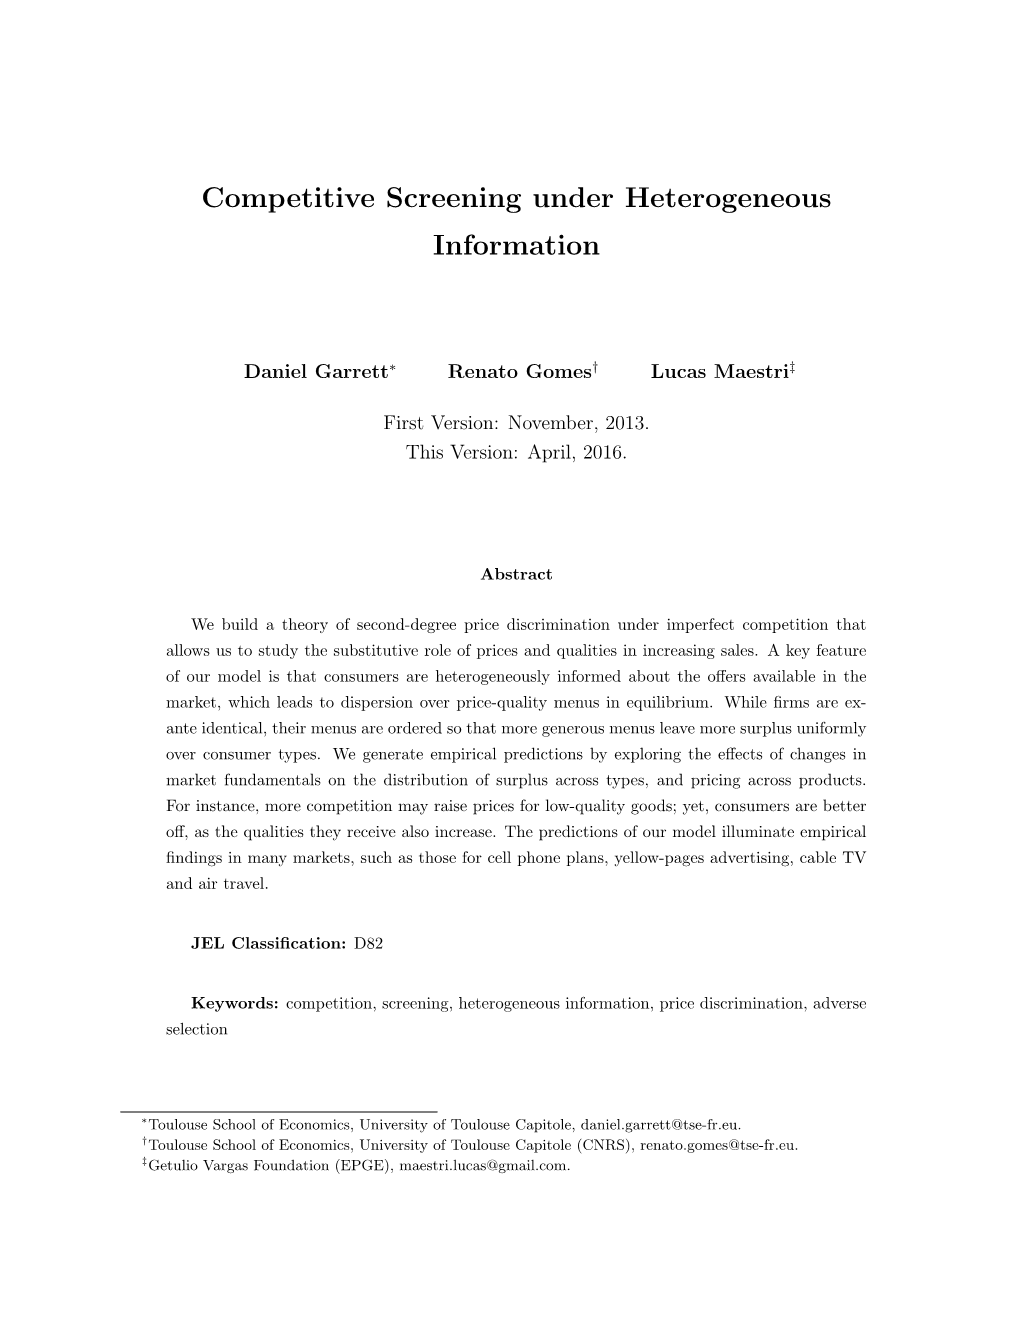 Competitive Screening Under Heterogeneous Information